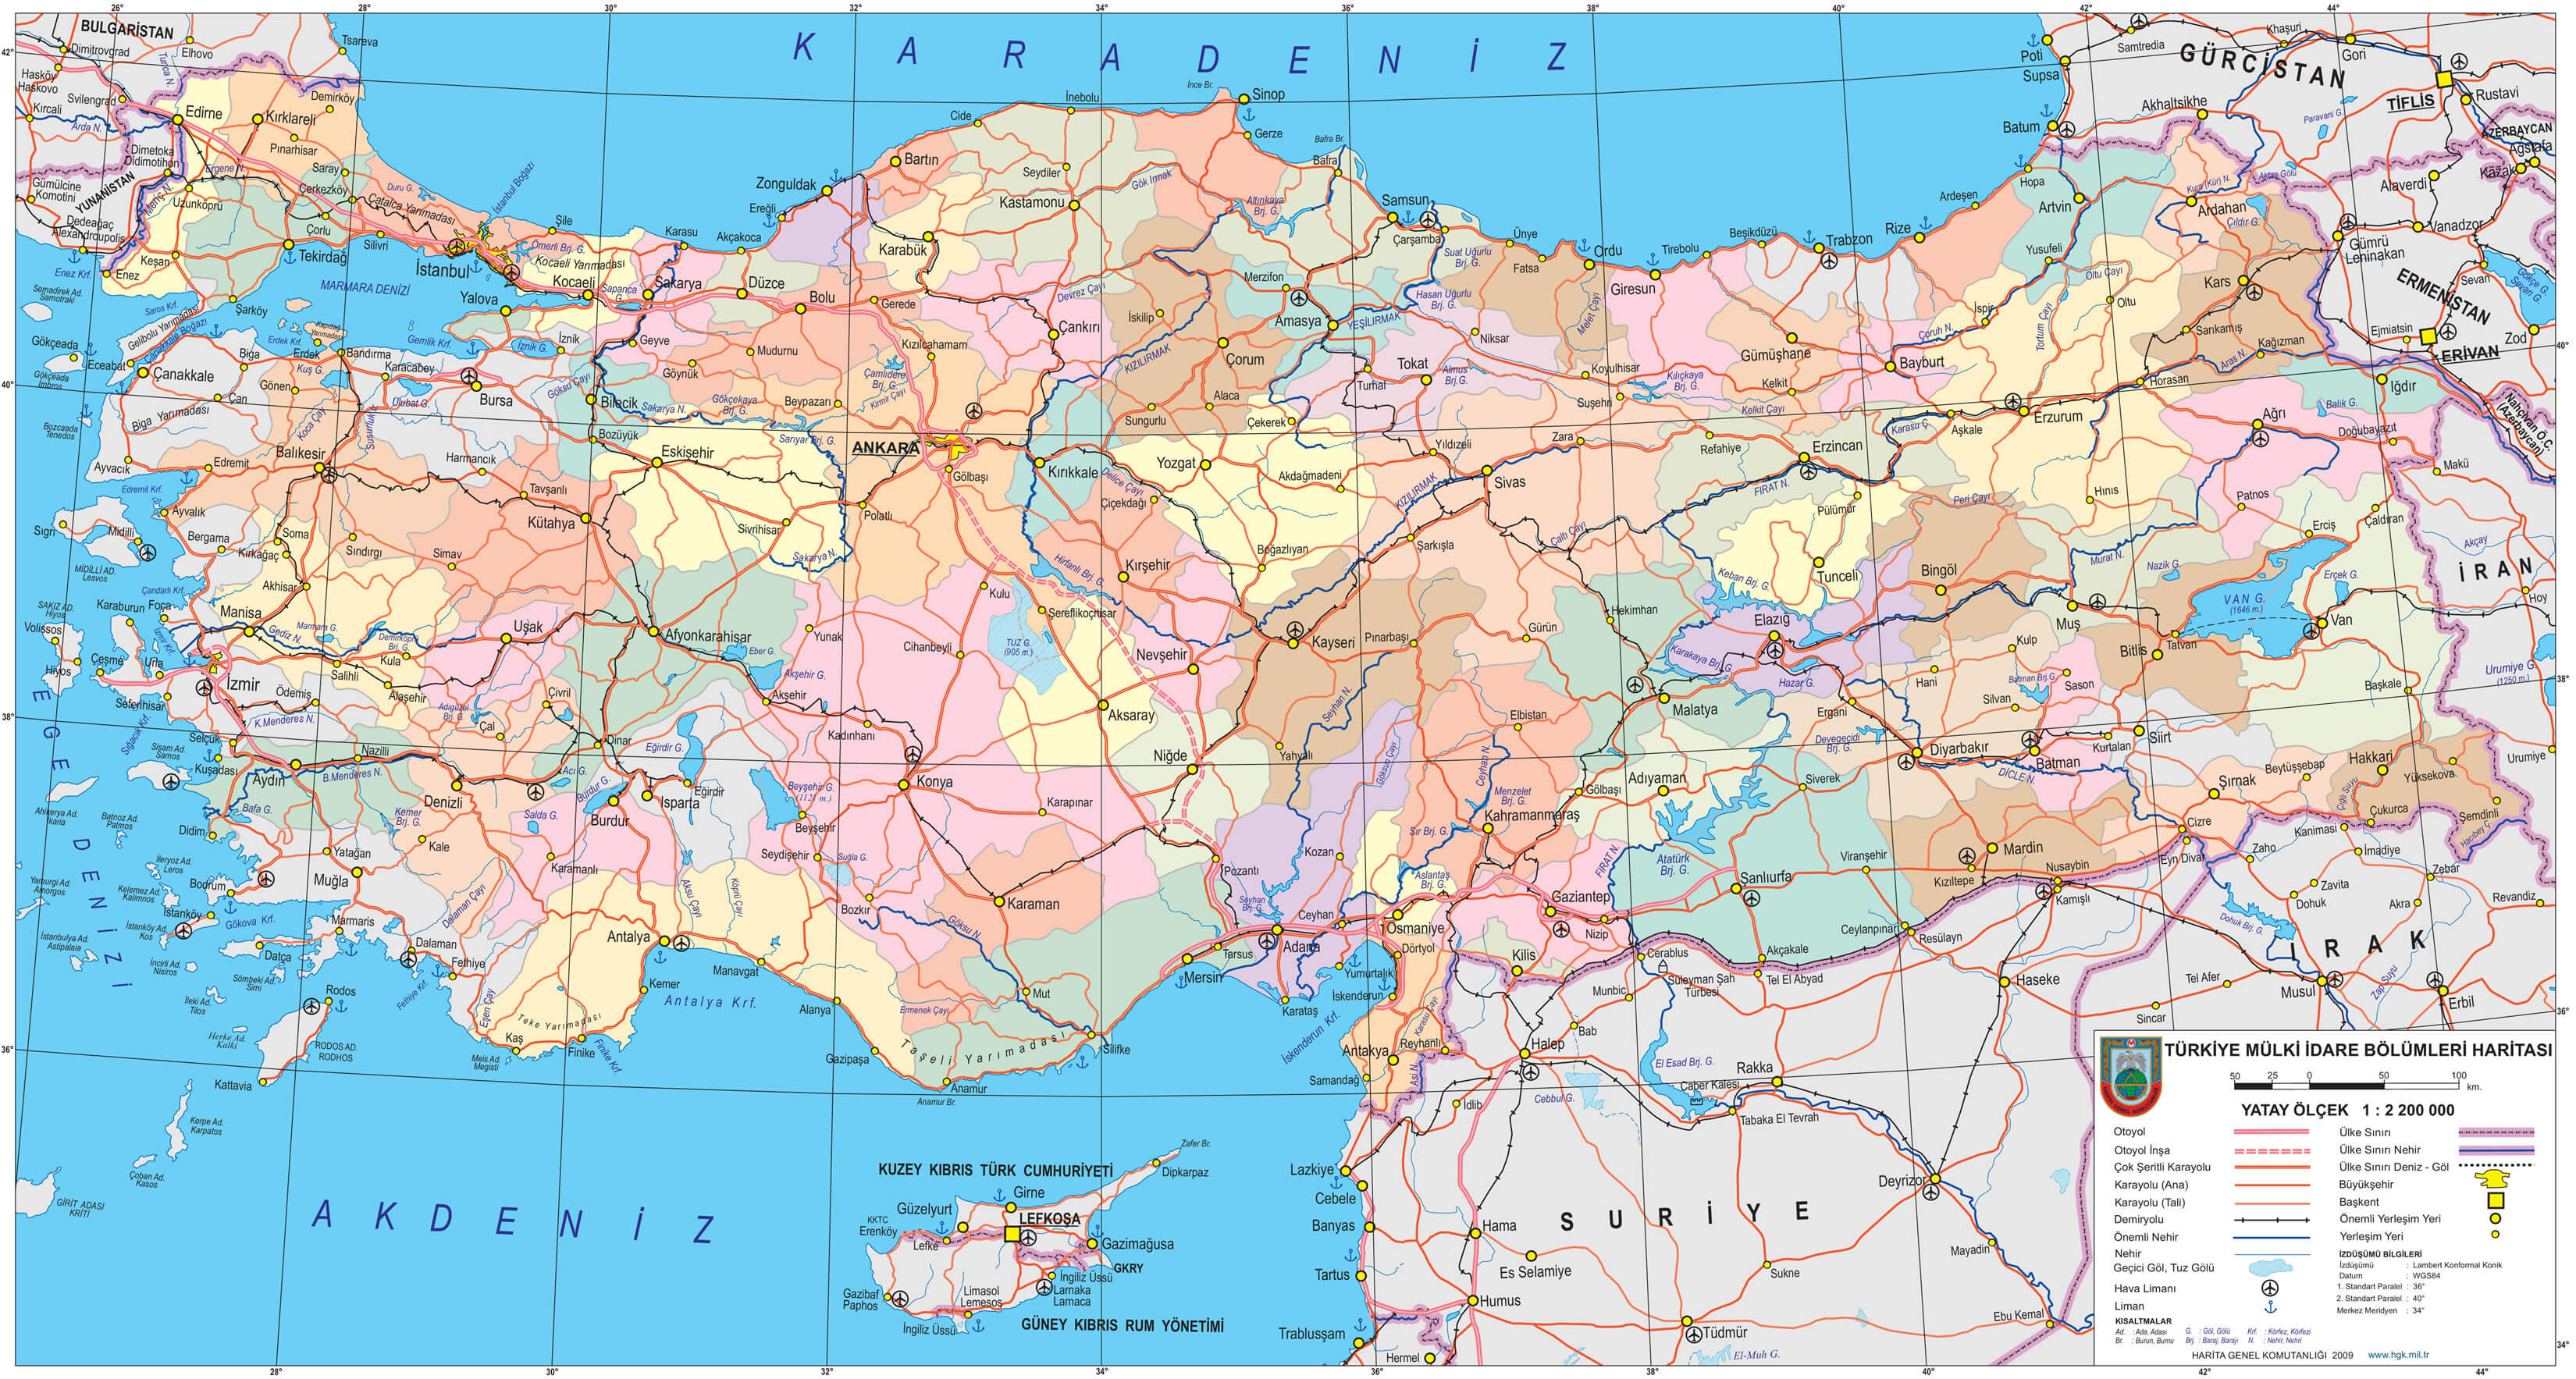 turkiye mulki idare haritasi